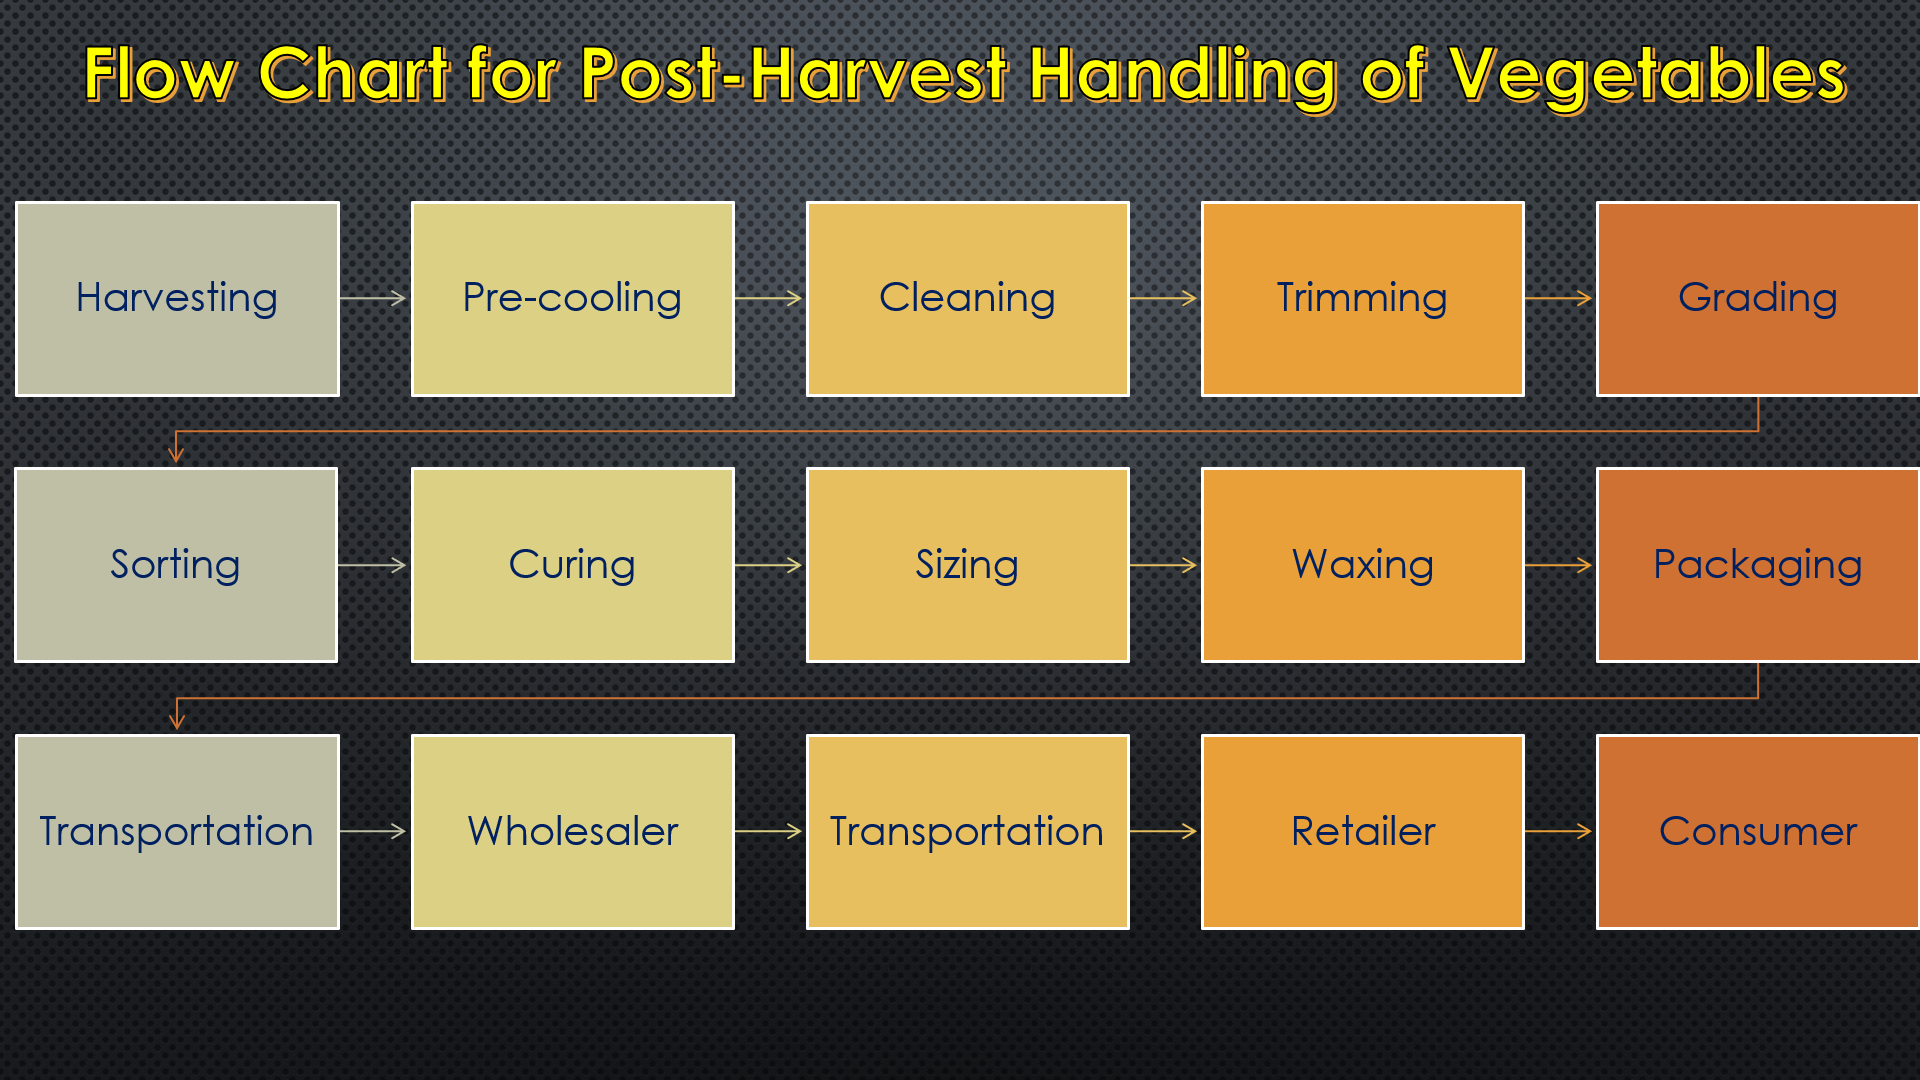 Flow Chart for Post-Harvest Handling of Vegetables